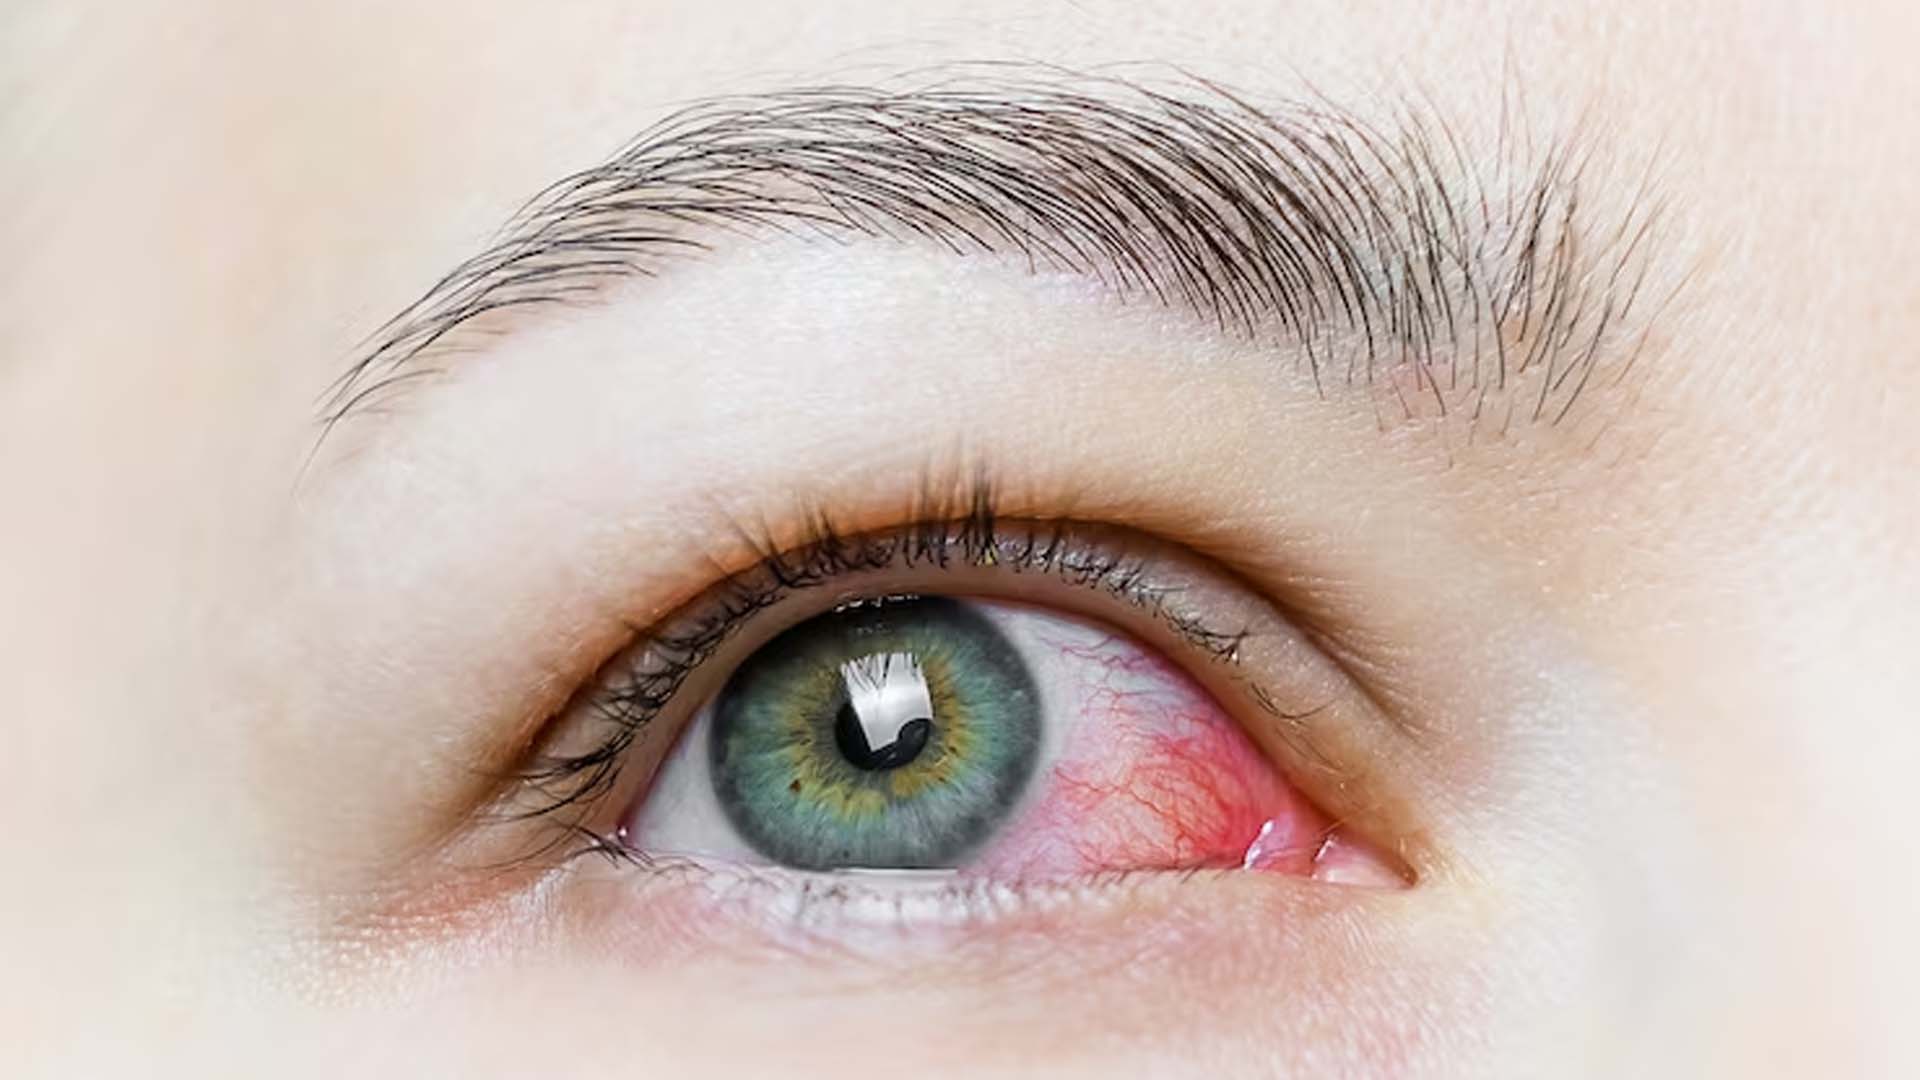 Conjunctivitis or Pink eye